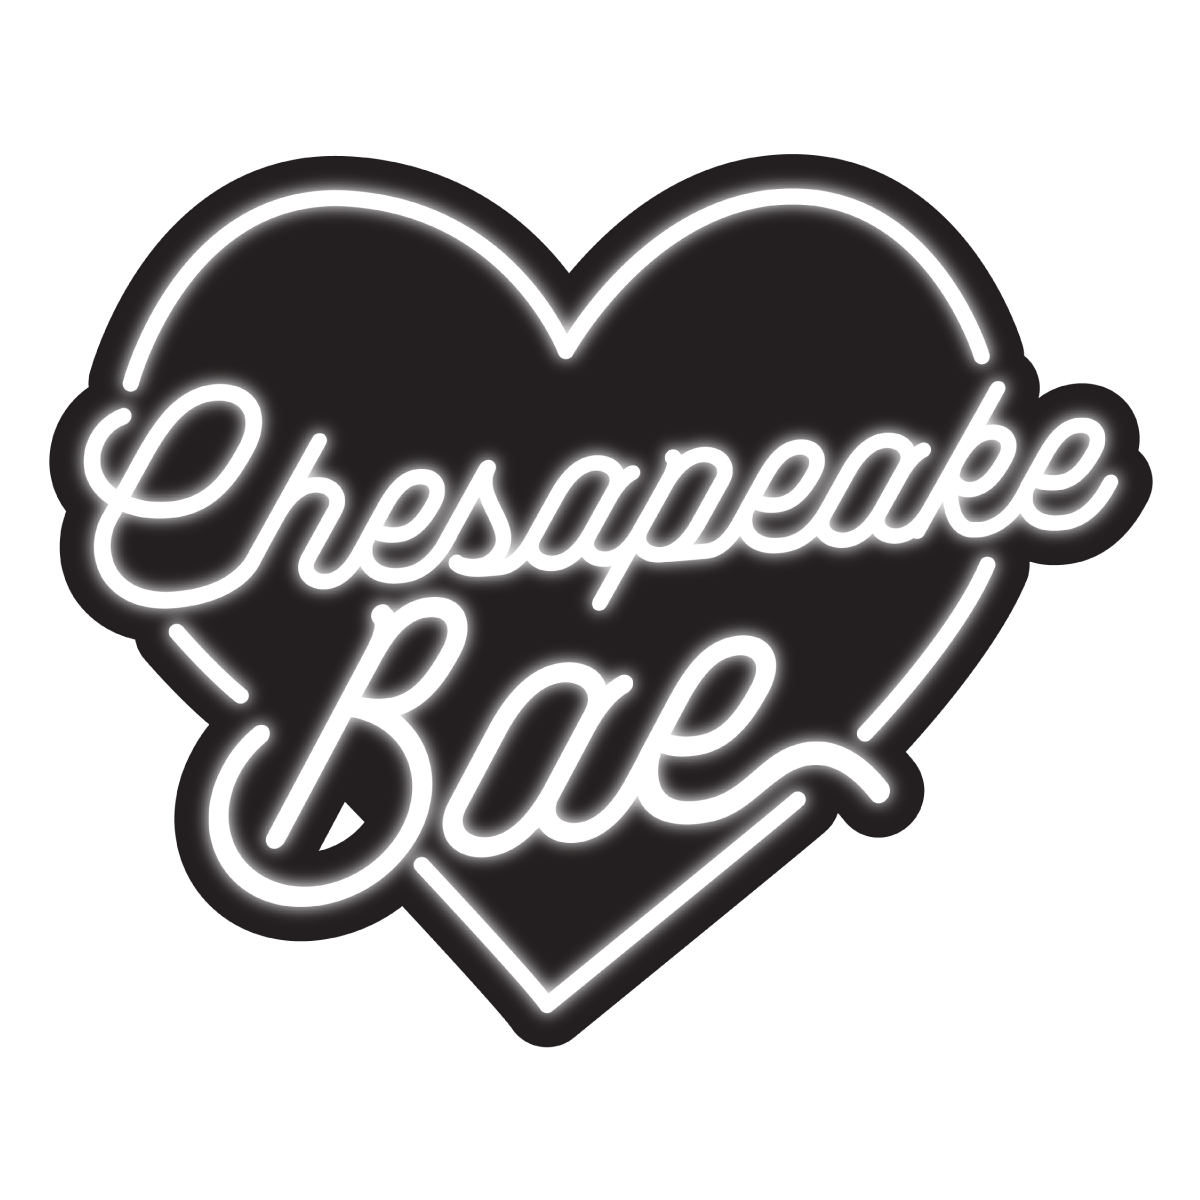 Chesapeake Bae / Sticker - Route One Apparel